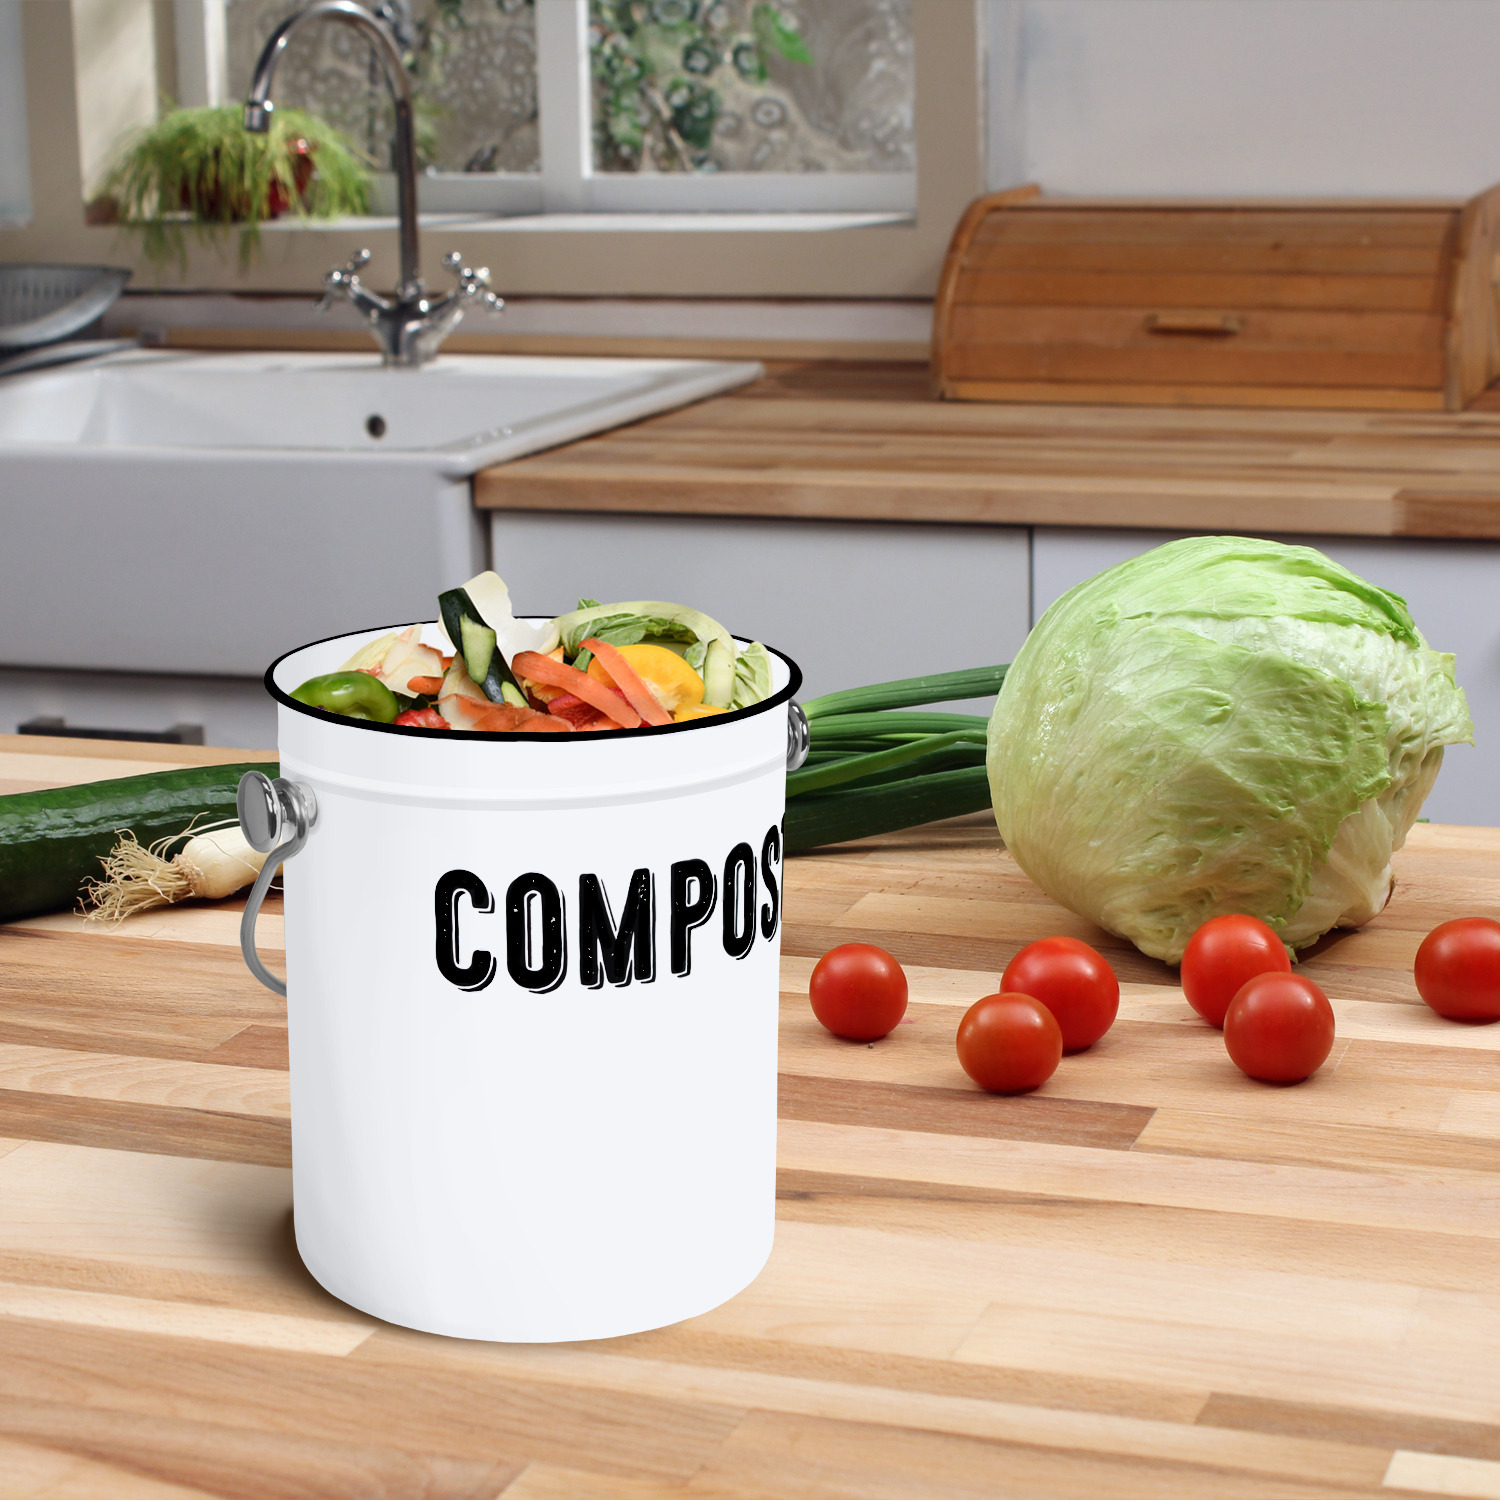 Farm House design  Compost bin  for kitchen scraps - WHITE